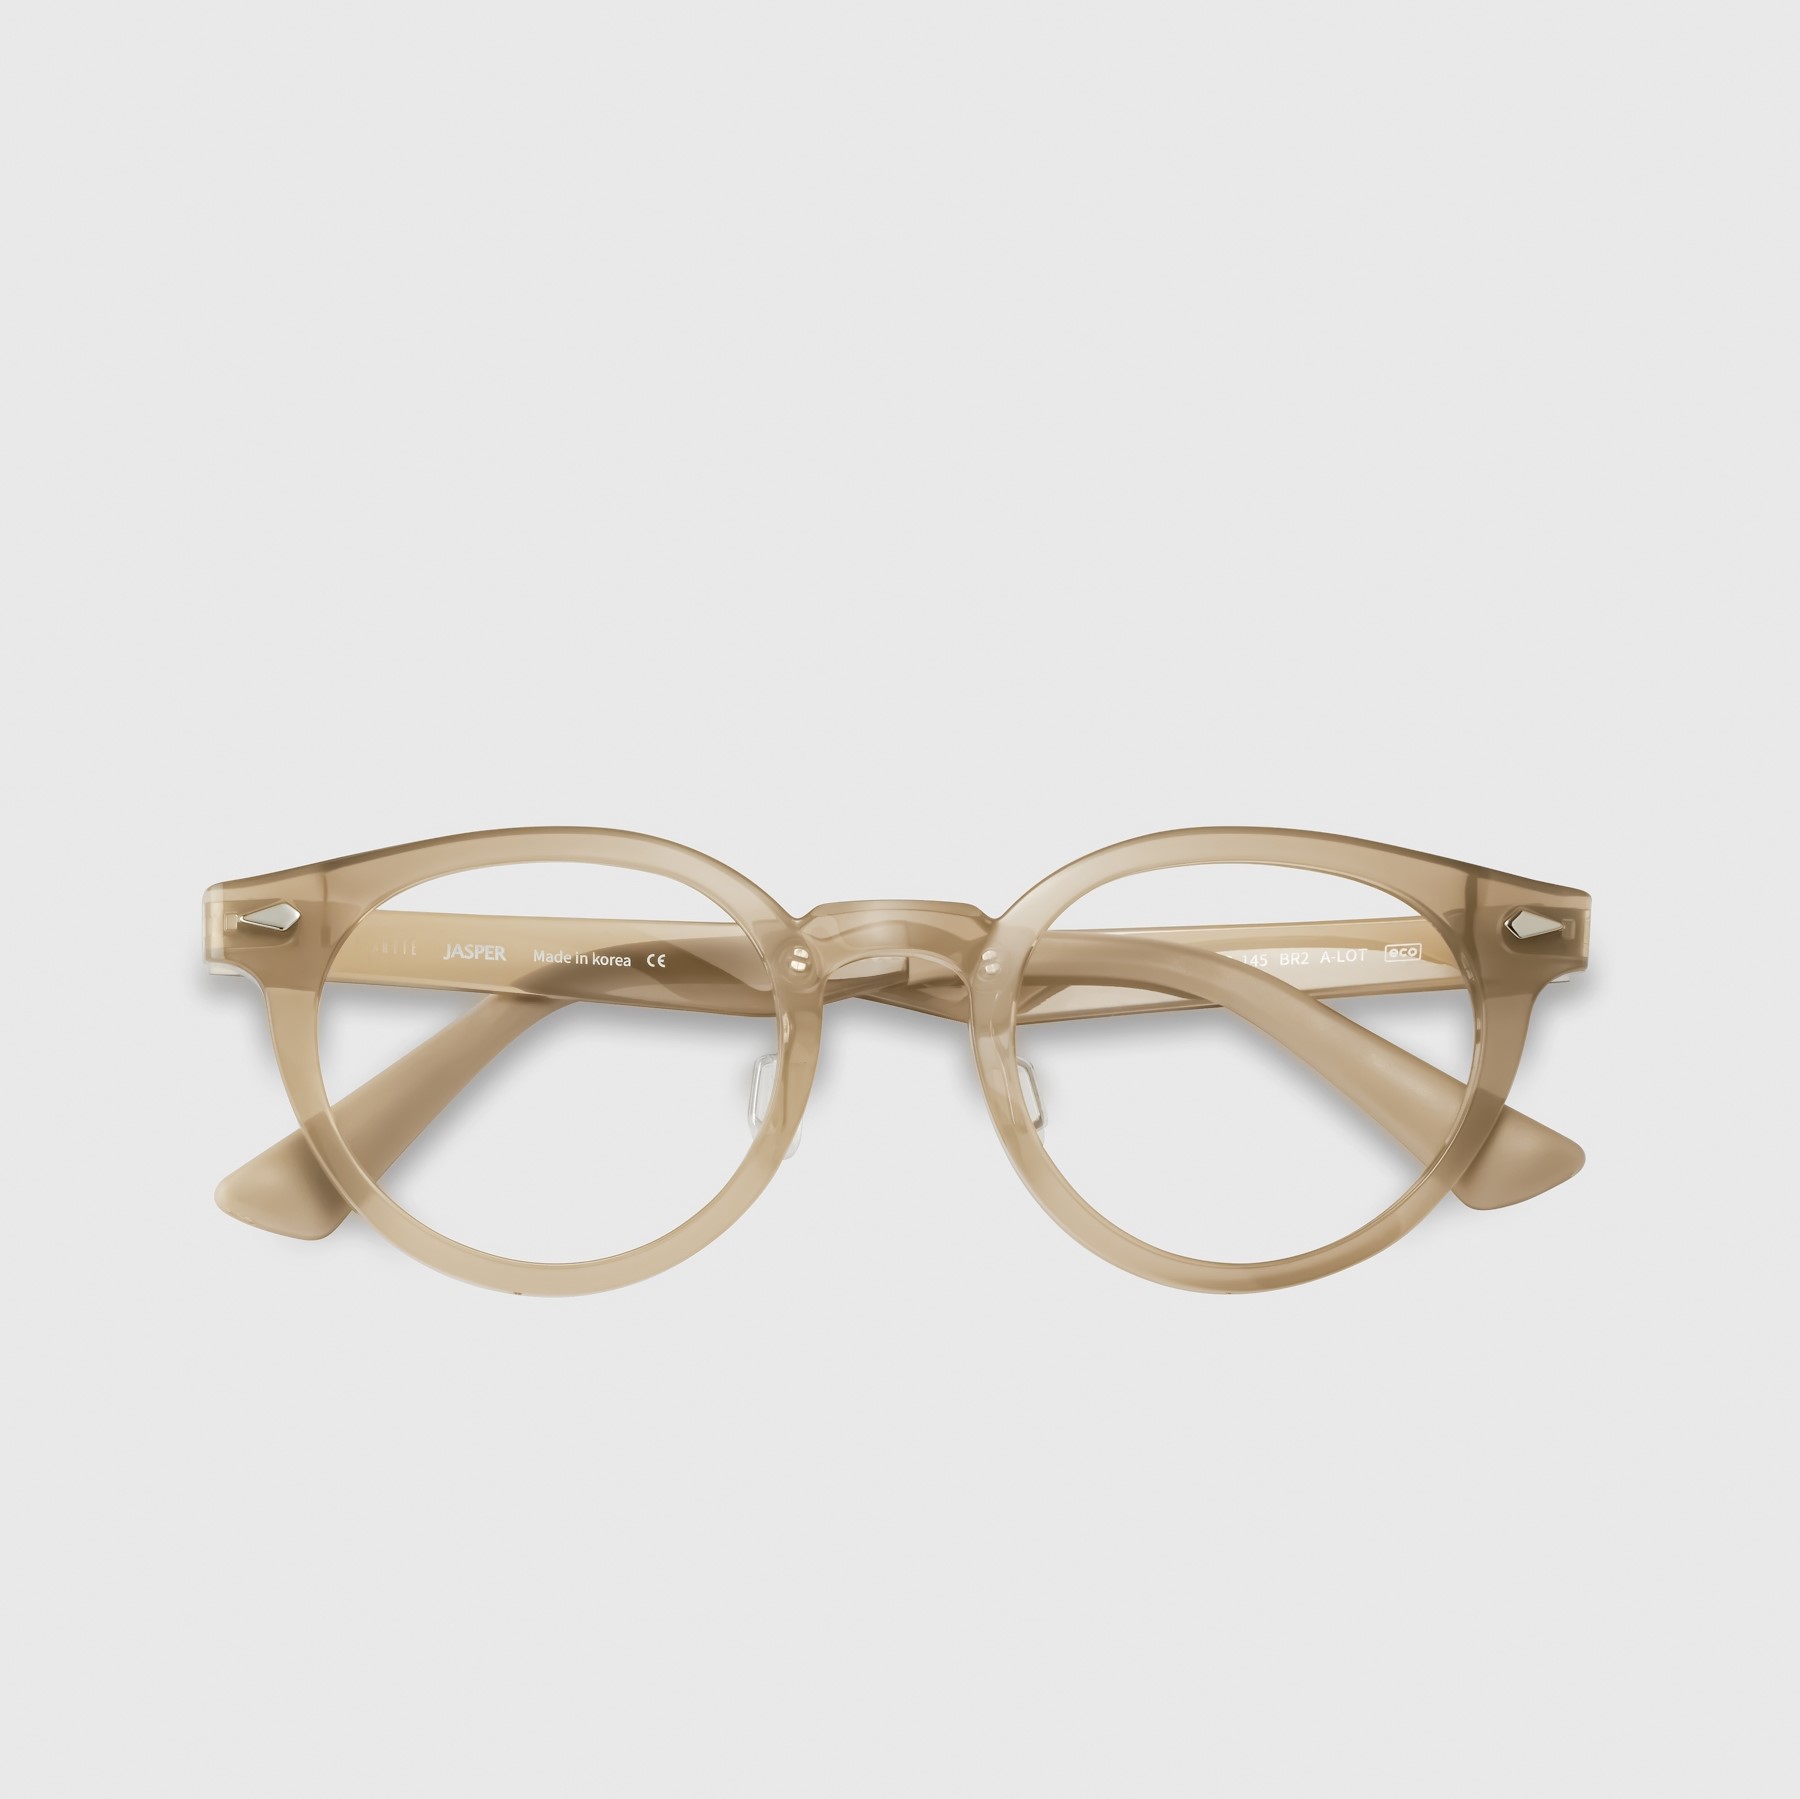 _CLROTTE_ Eyewear Glasses_ JASPER